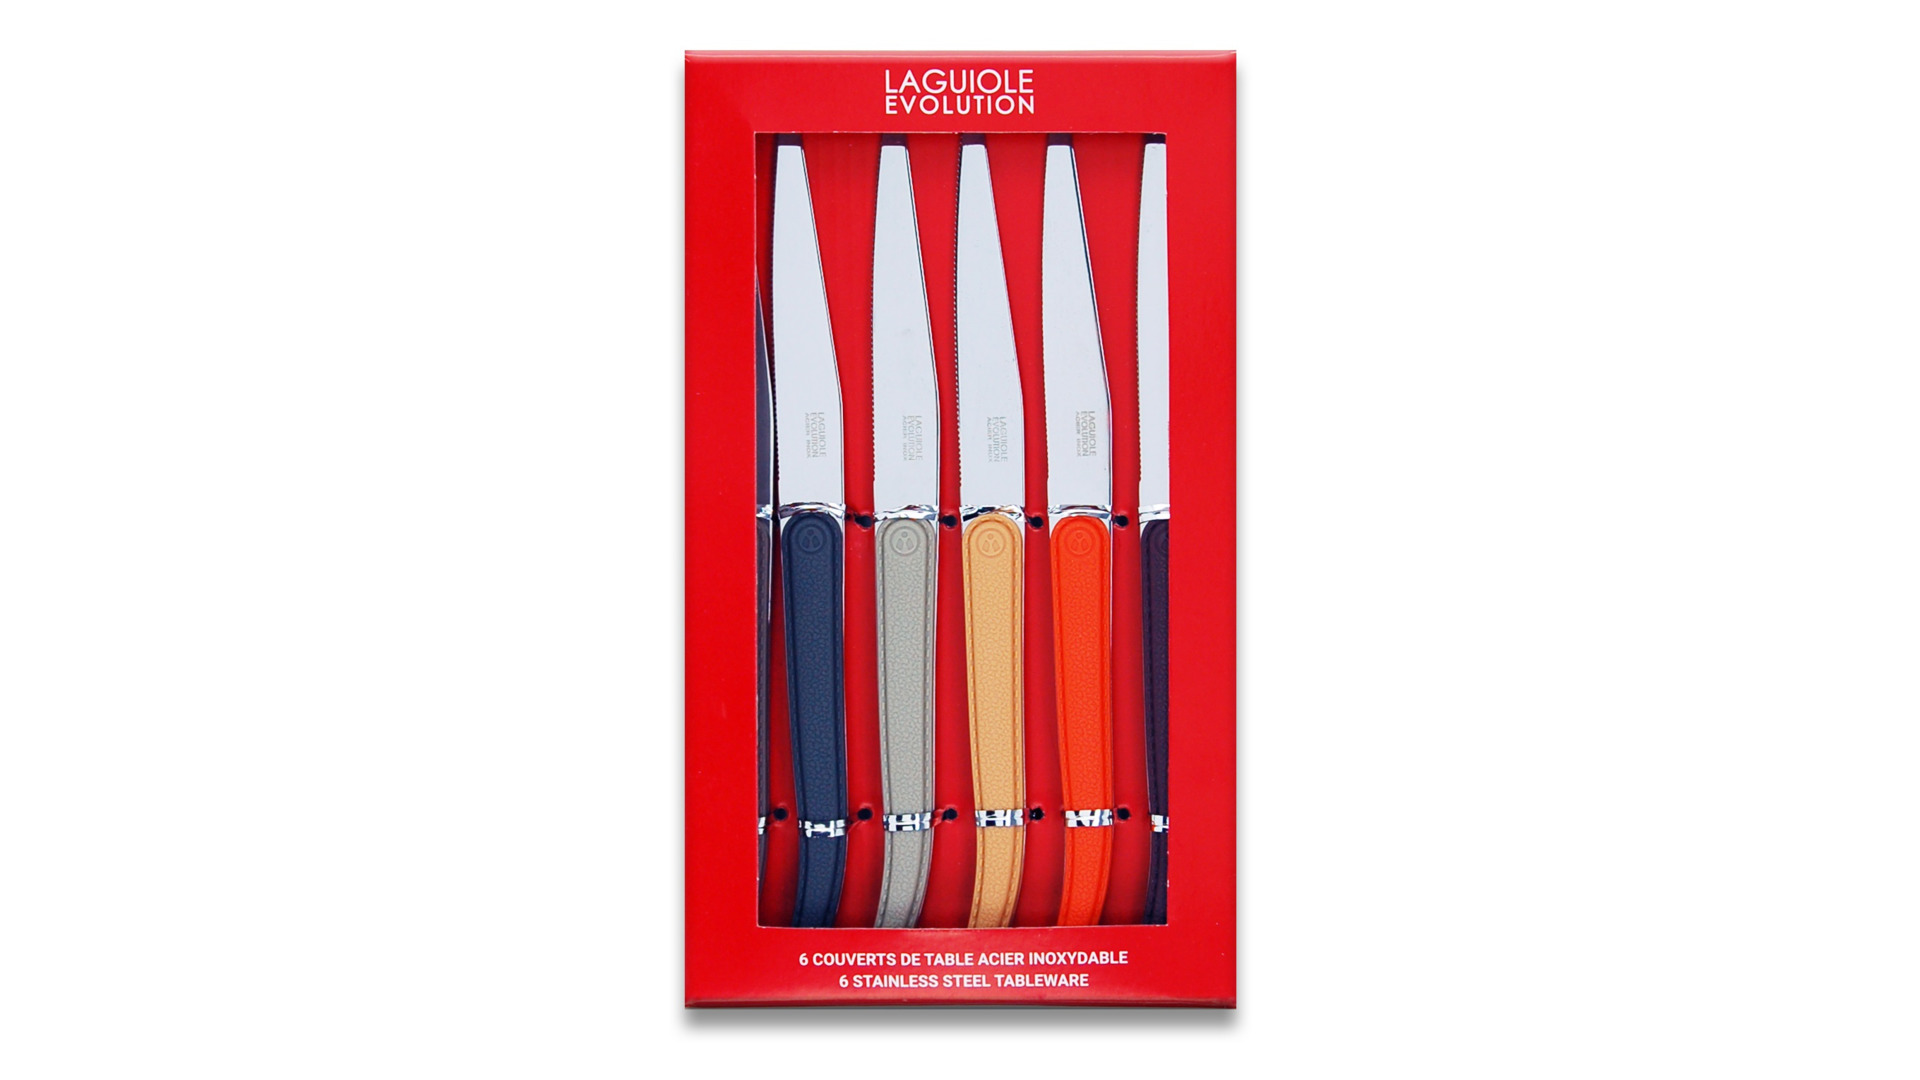 Набор ножей для стейка Tarrerias Bonjean Лайоль-эволюция, ручка - АБС пластик, 6 шт